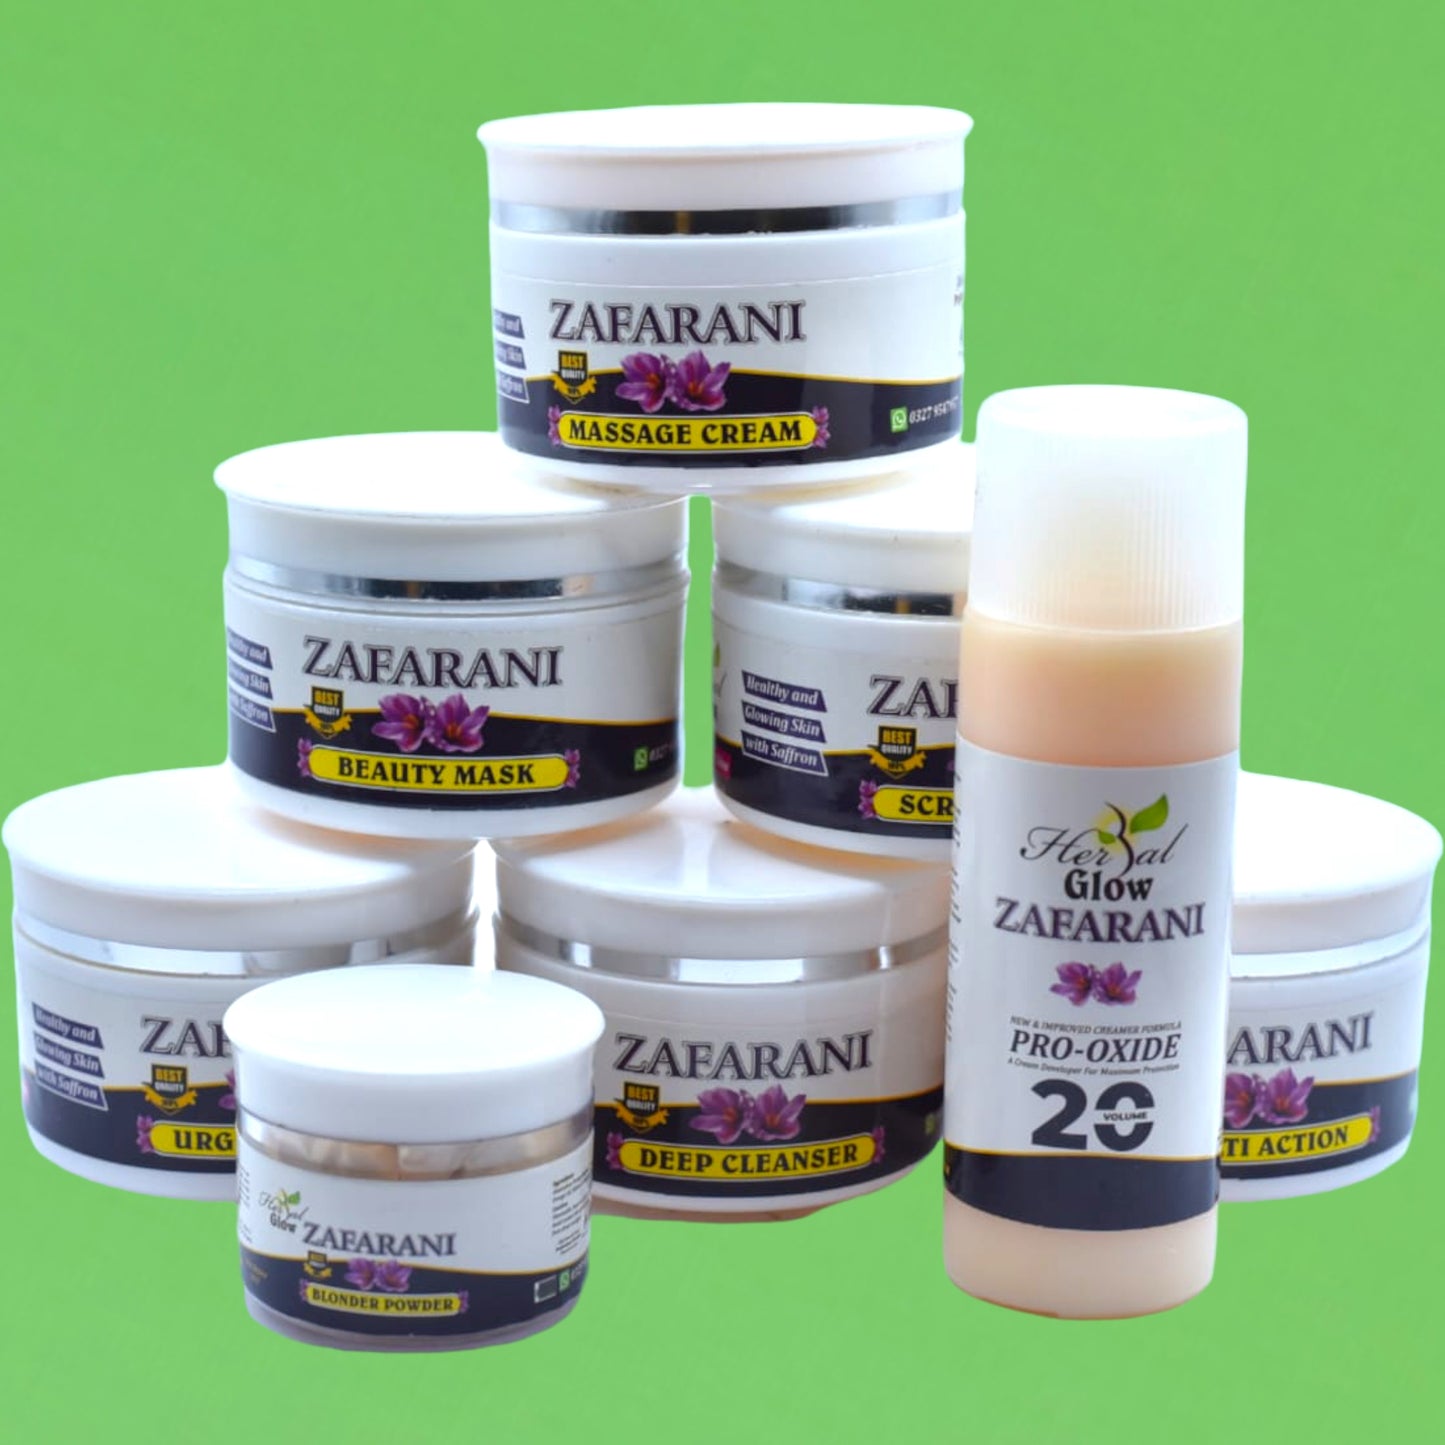 Zafaran Facial Kit Small